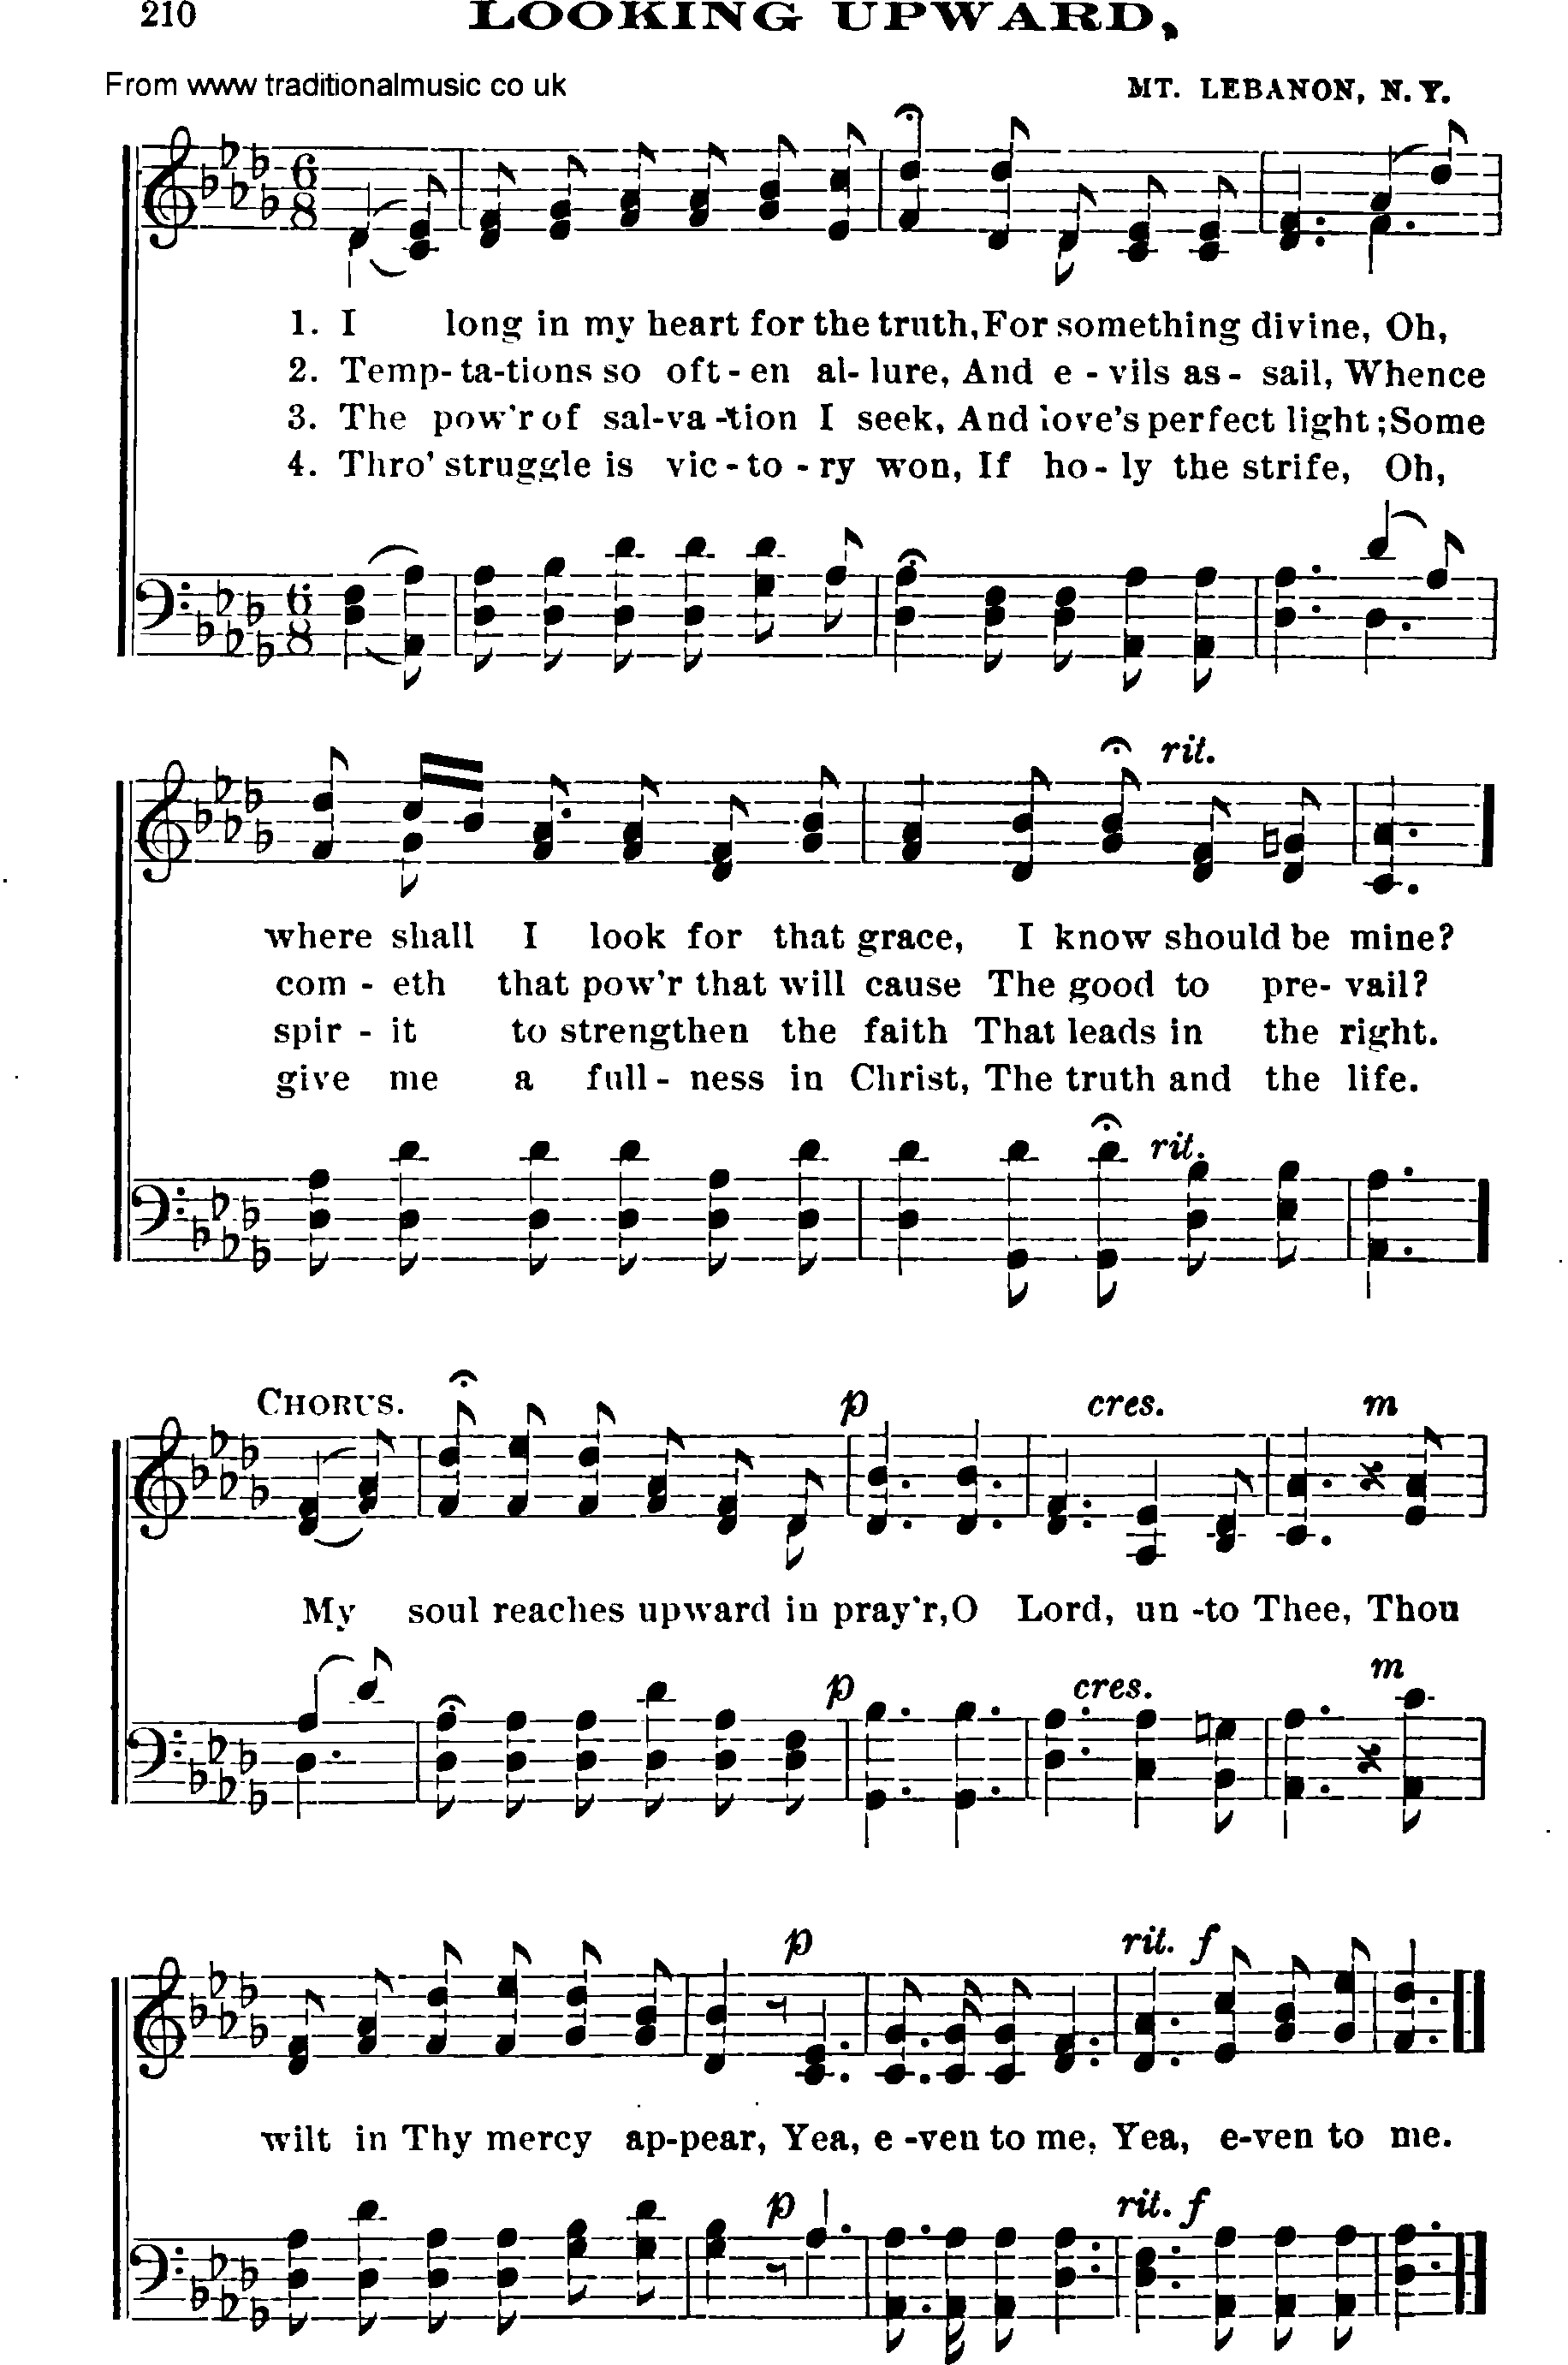 Shaker Music collection, Hymn: looking upward, sheetmusic and PDF